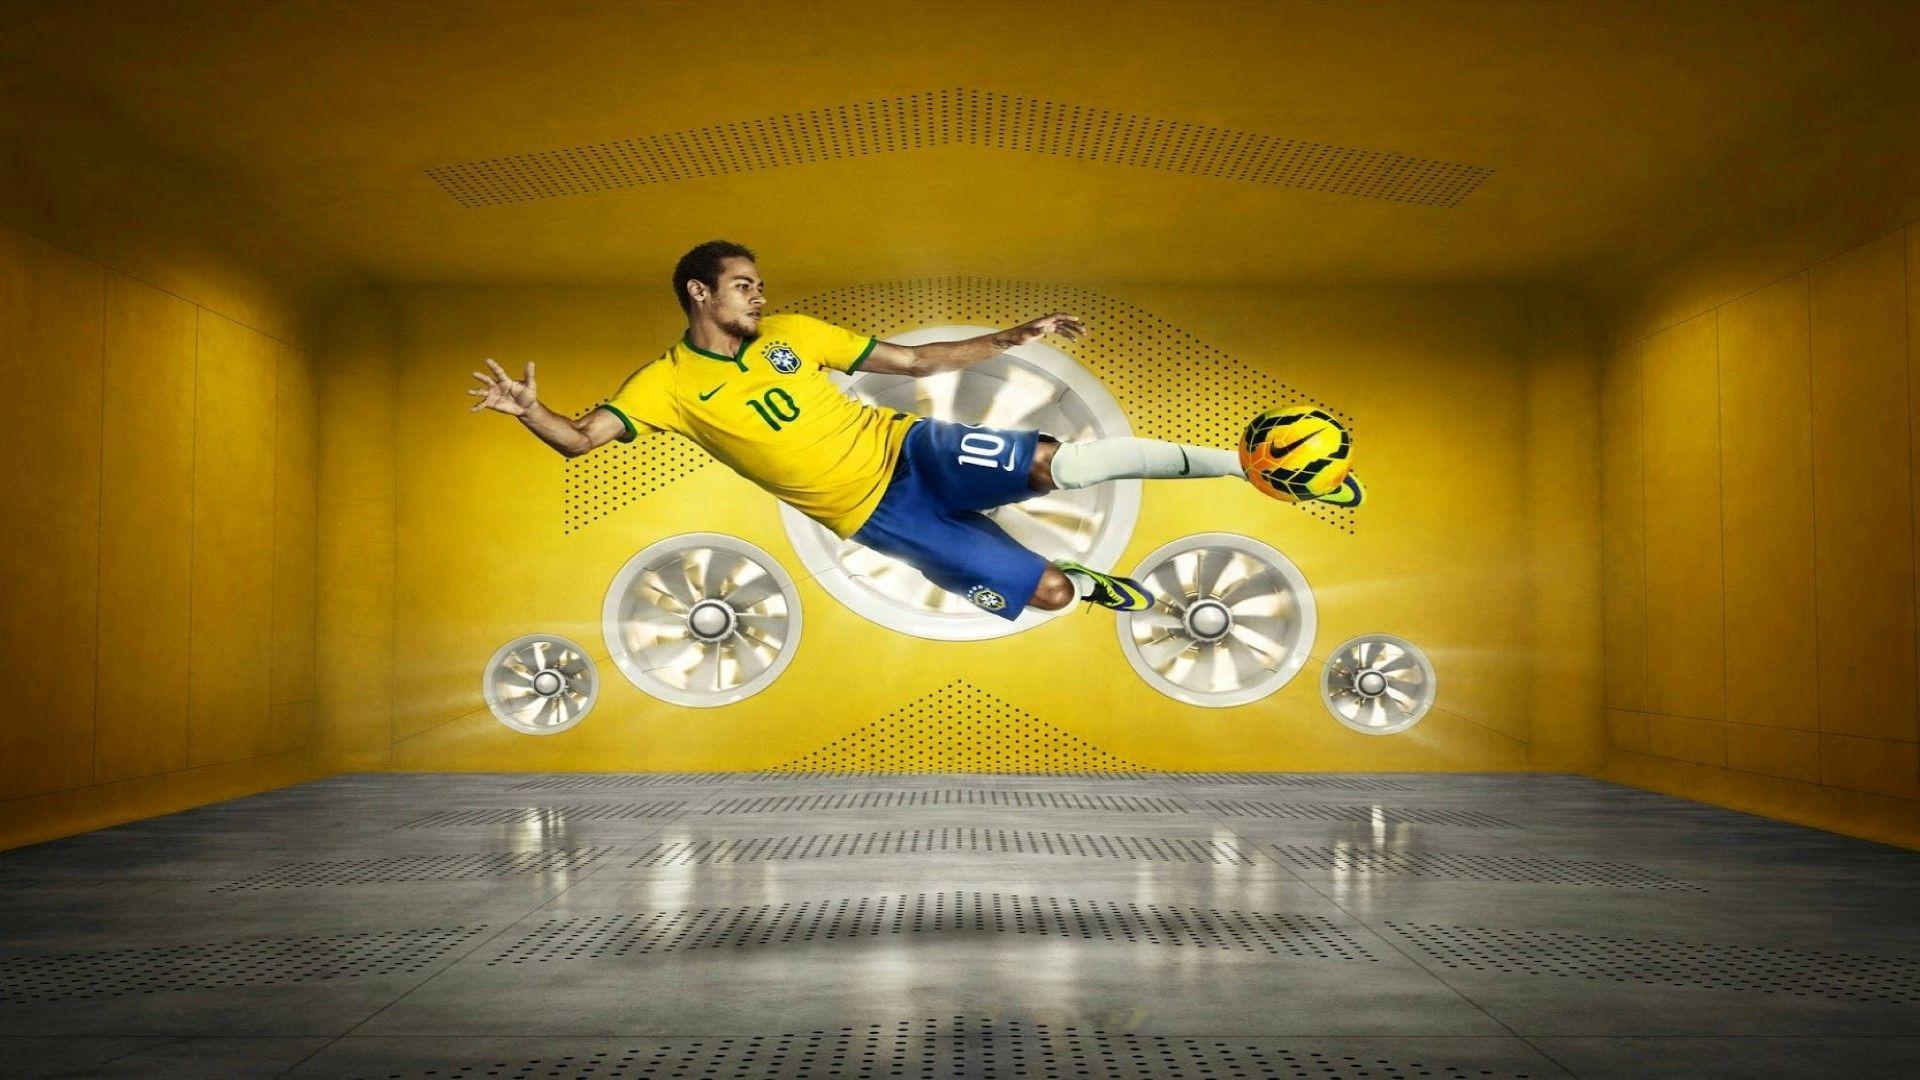 Fifa World Cup Brazil 2014 Neymar Photo Wallpapers